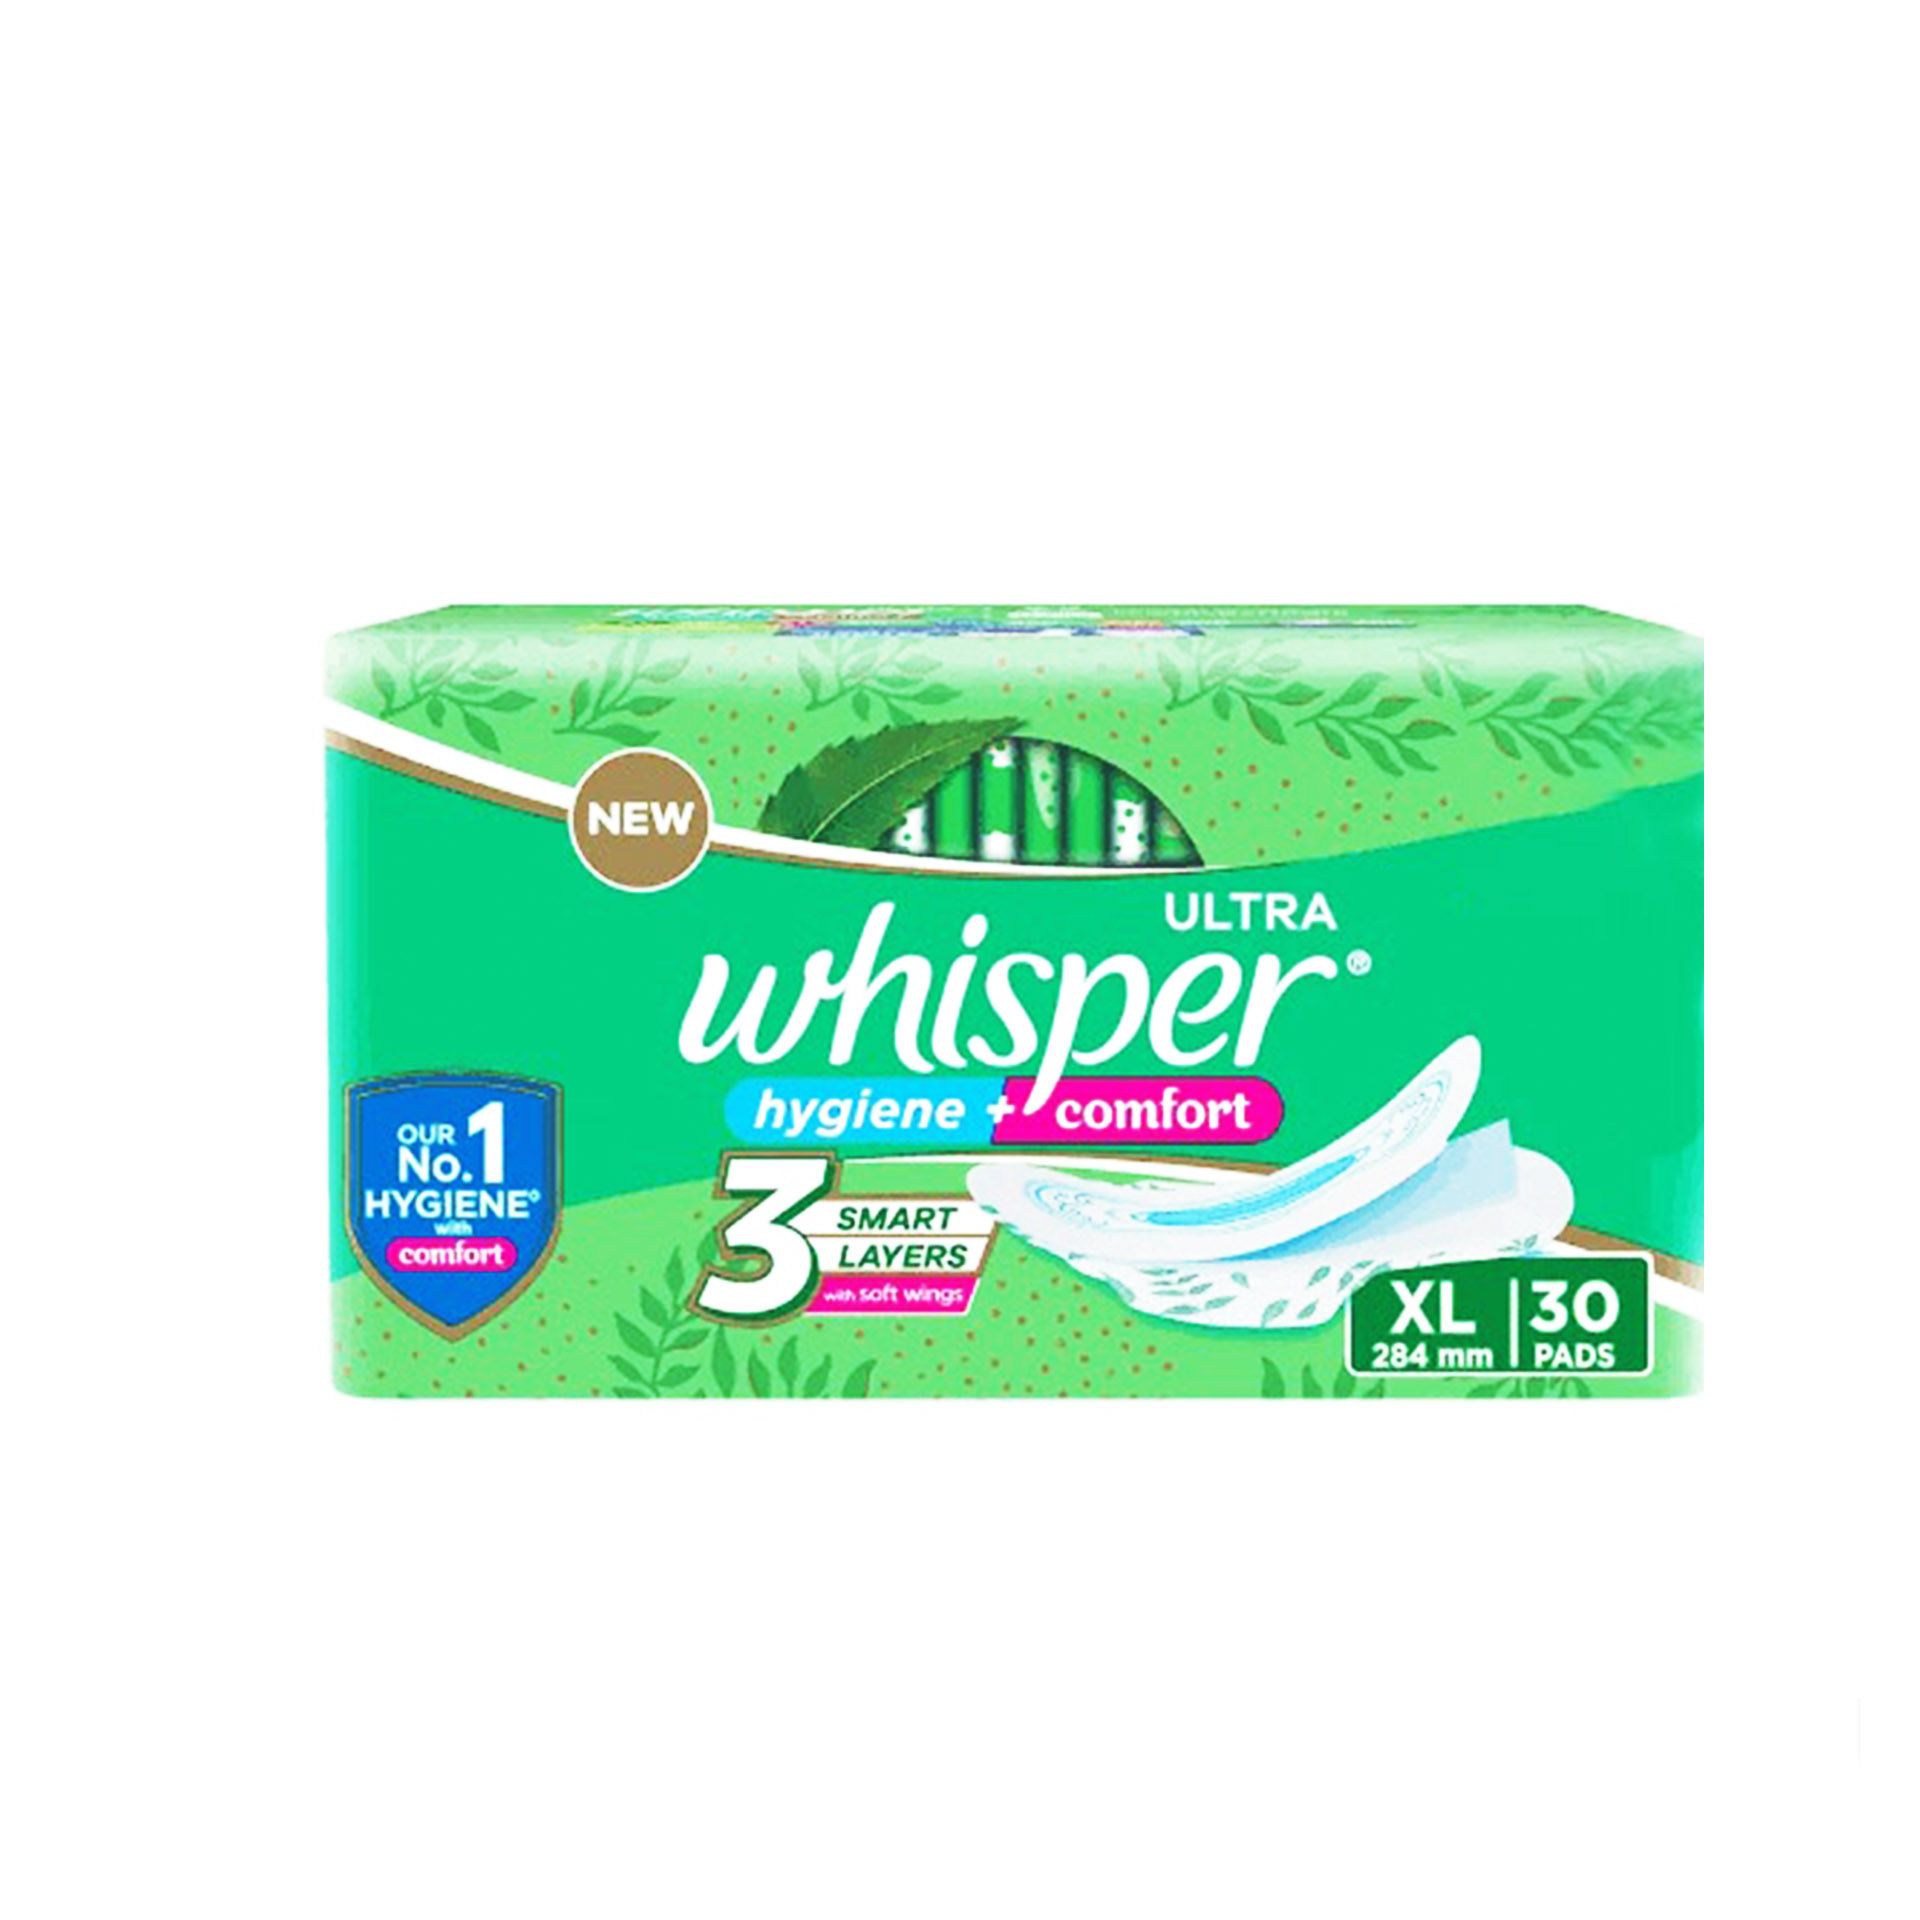 Whisper Ultra Clean Sanitary Pads for Women XL 30 Napkins  